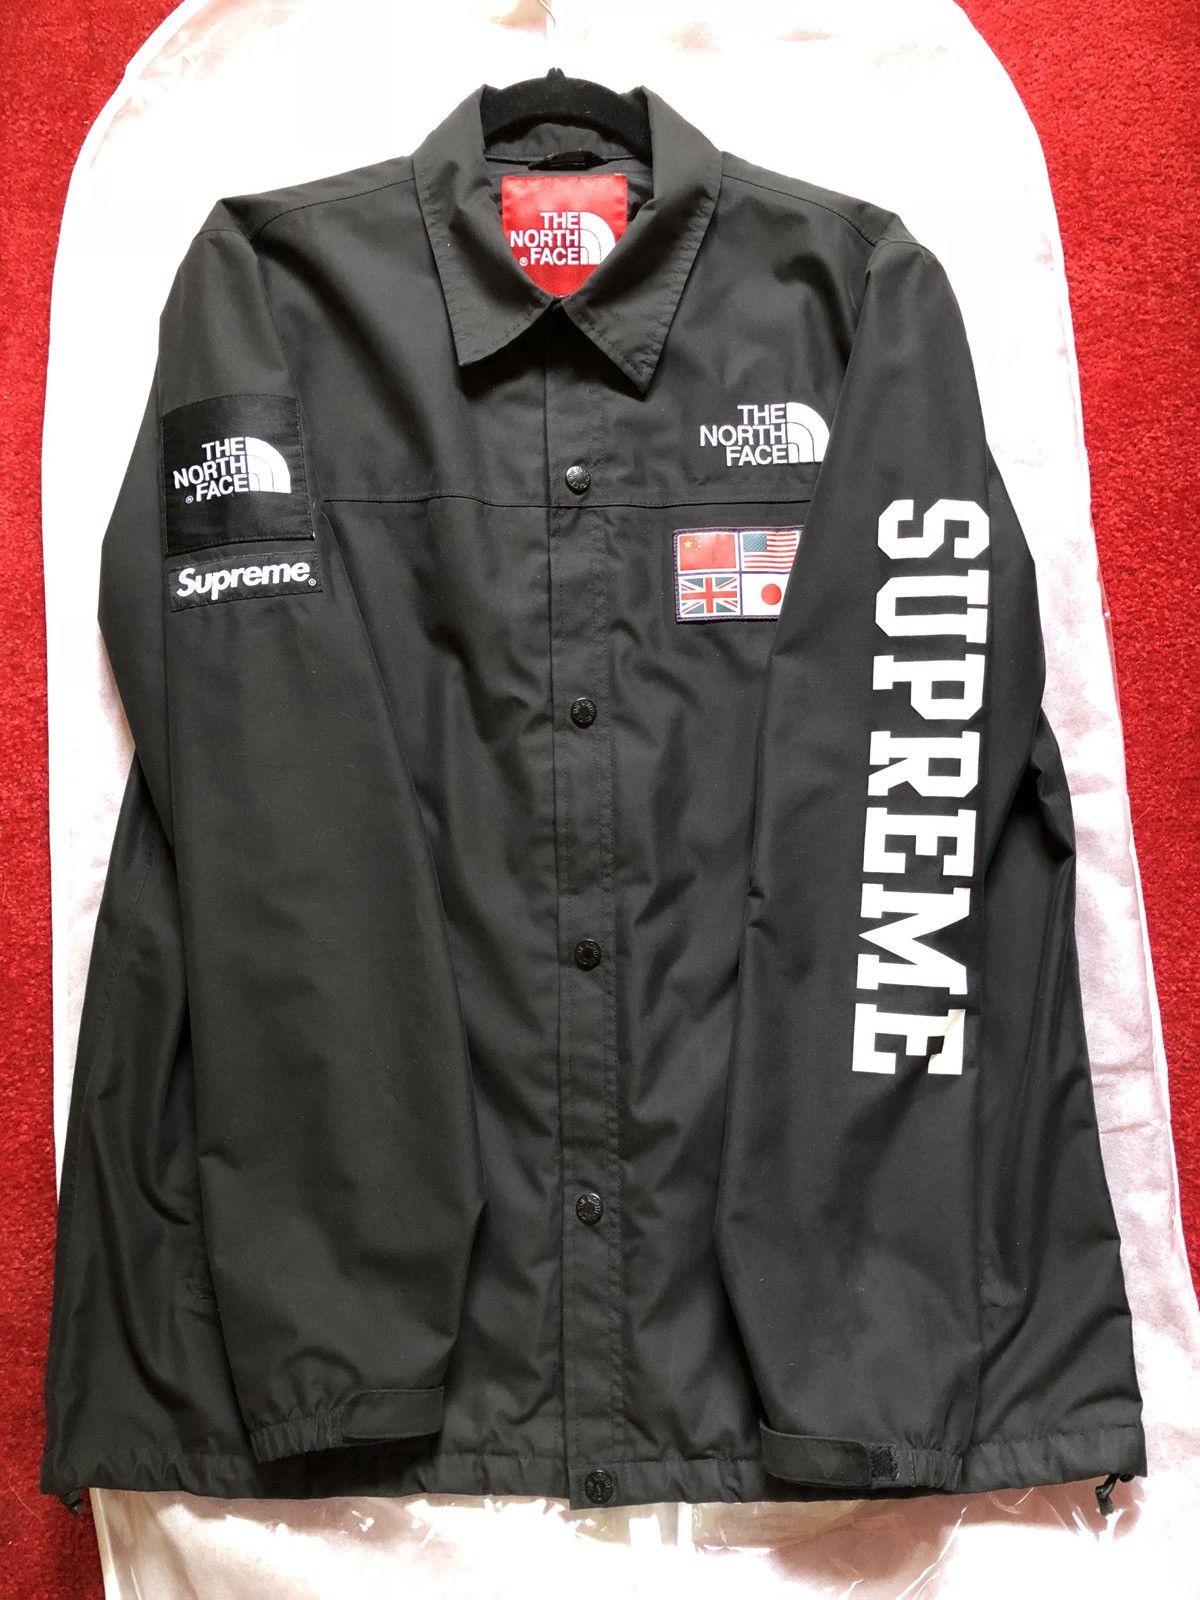 Supreme Supreme The North Face Expedition Coaches Jacket Large Black Size US L / EU 52-54 / 3 - 1 Preview